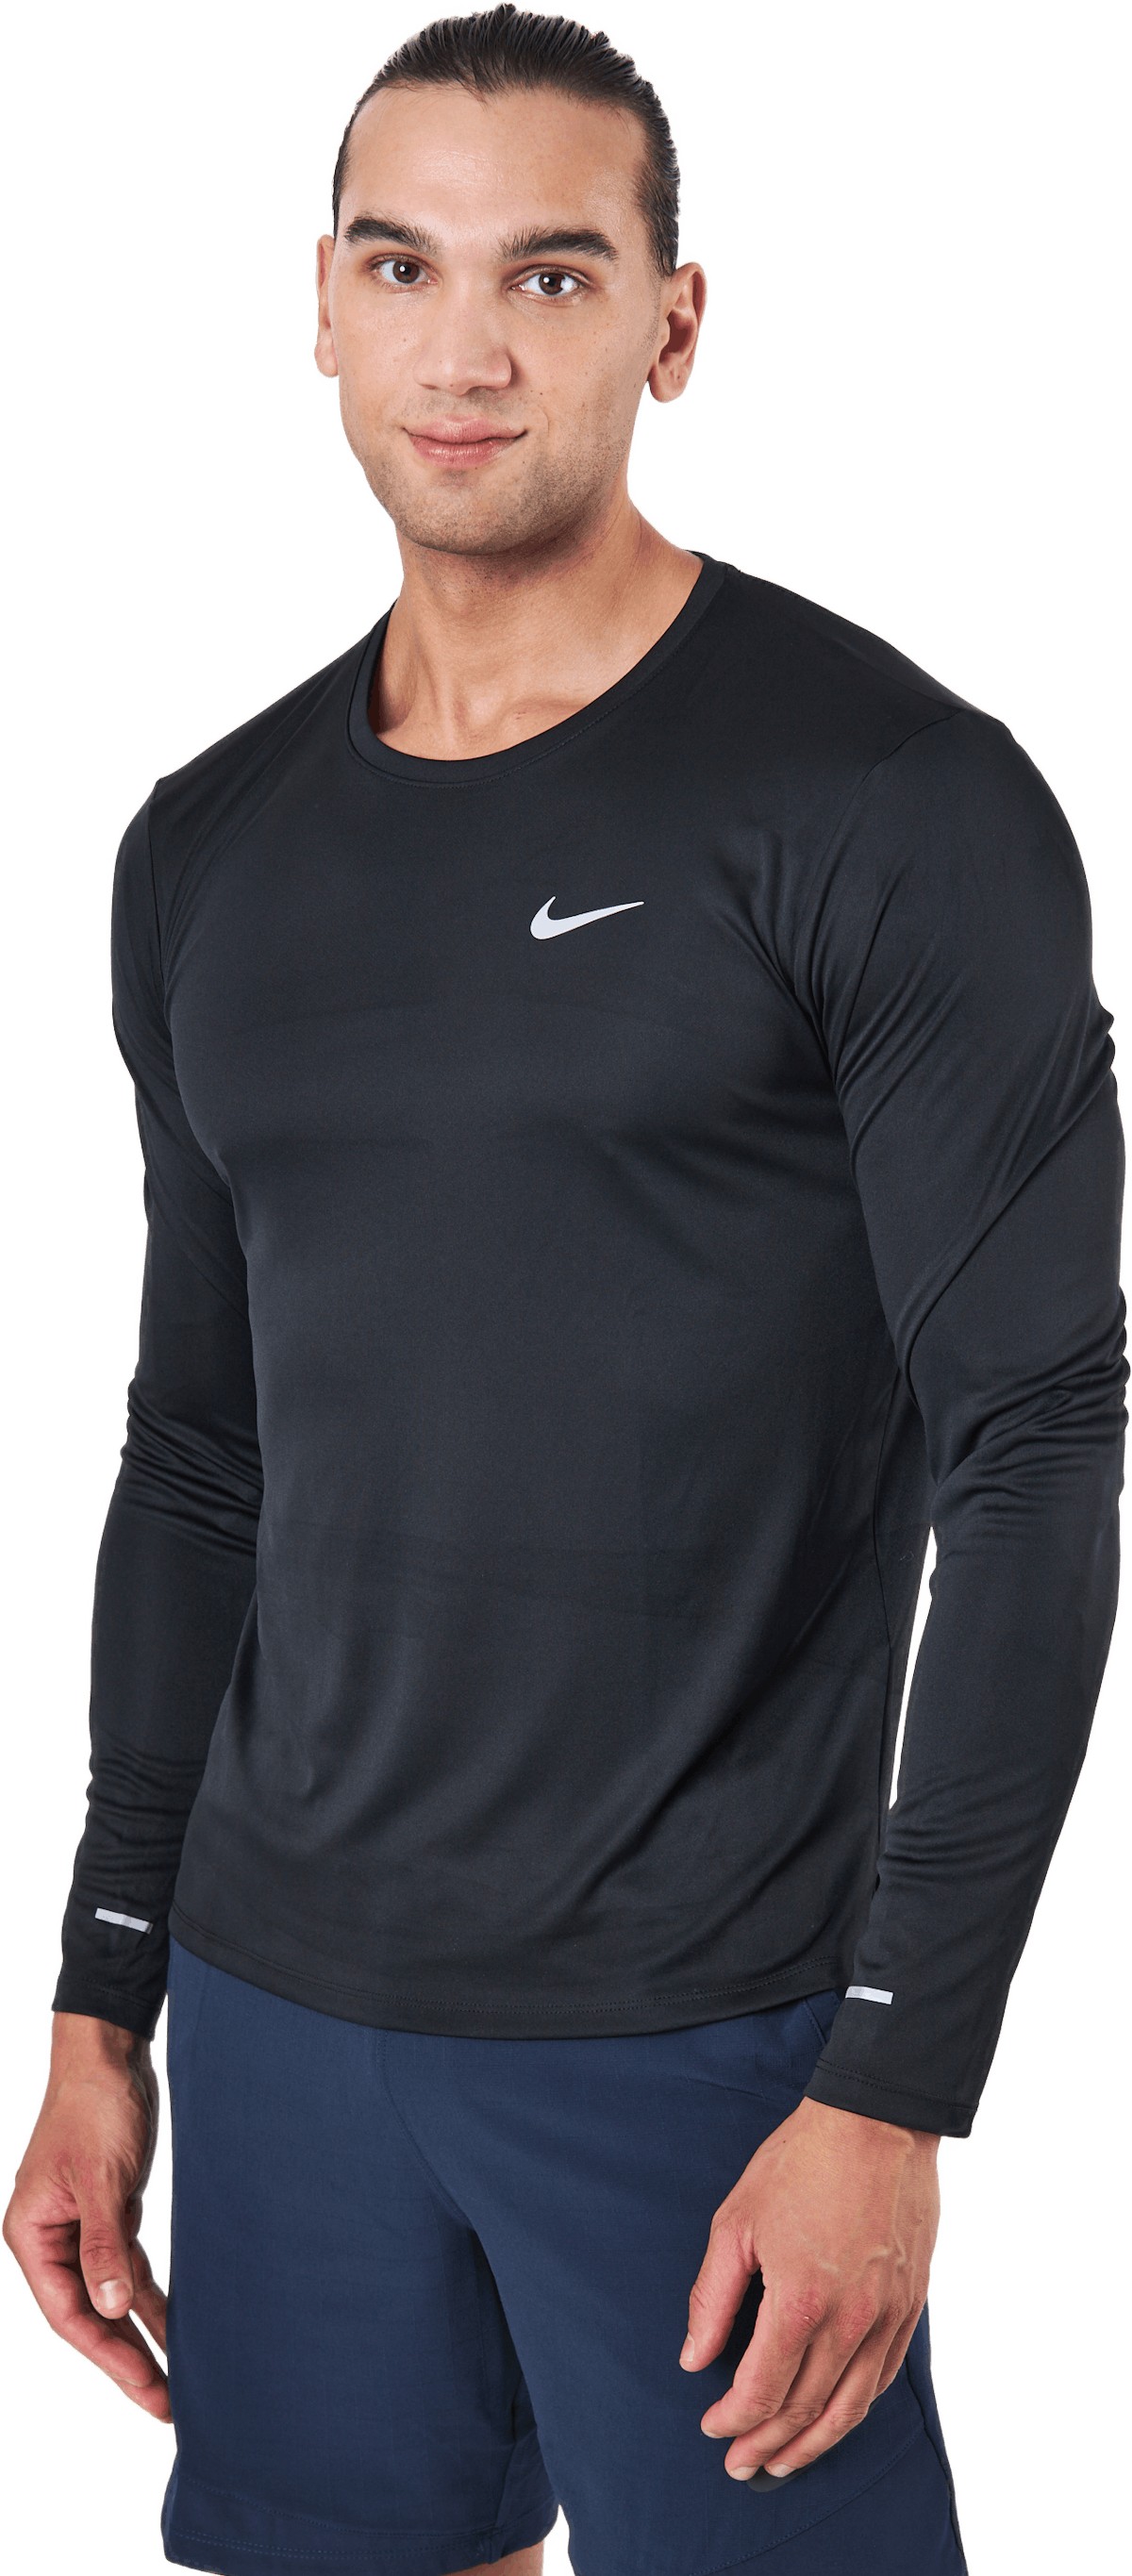 Dri-fit Miler Men's Long-sleev Black/reflective Silv | The best sport ...